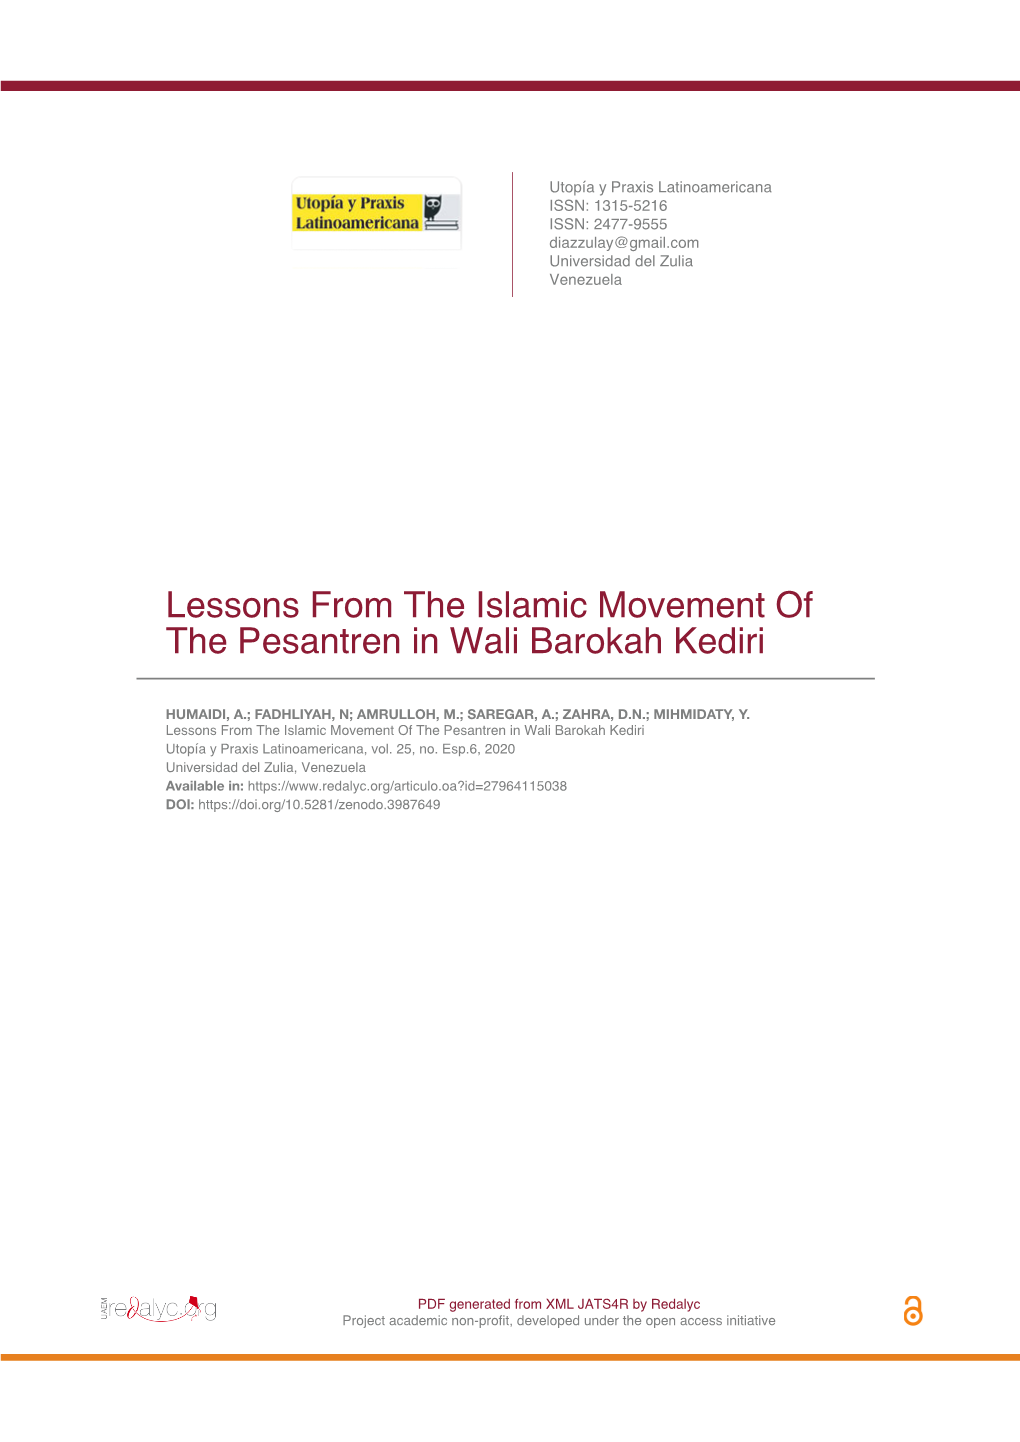 Lessons from the Islamic Movement of the Pesantren in Wali Barokah Kediri